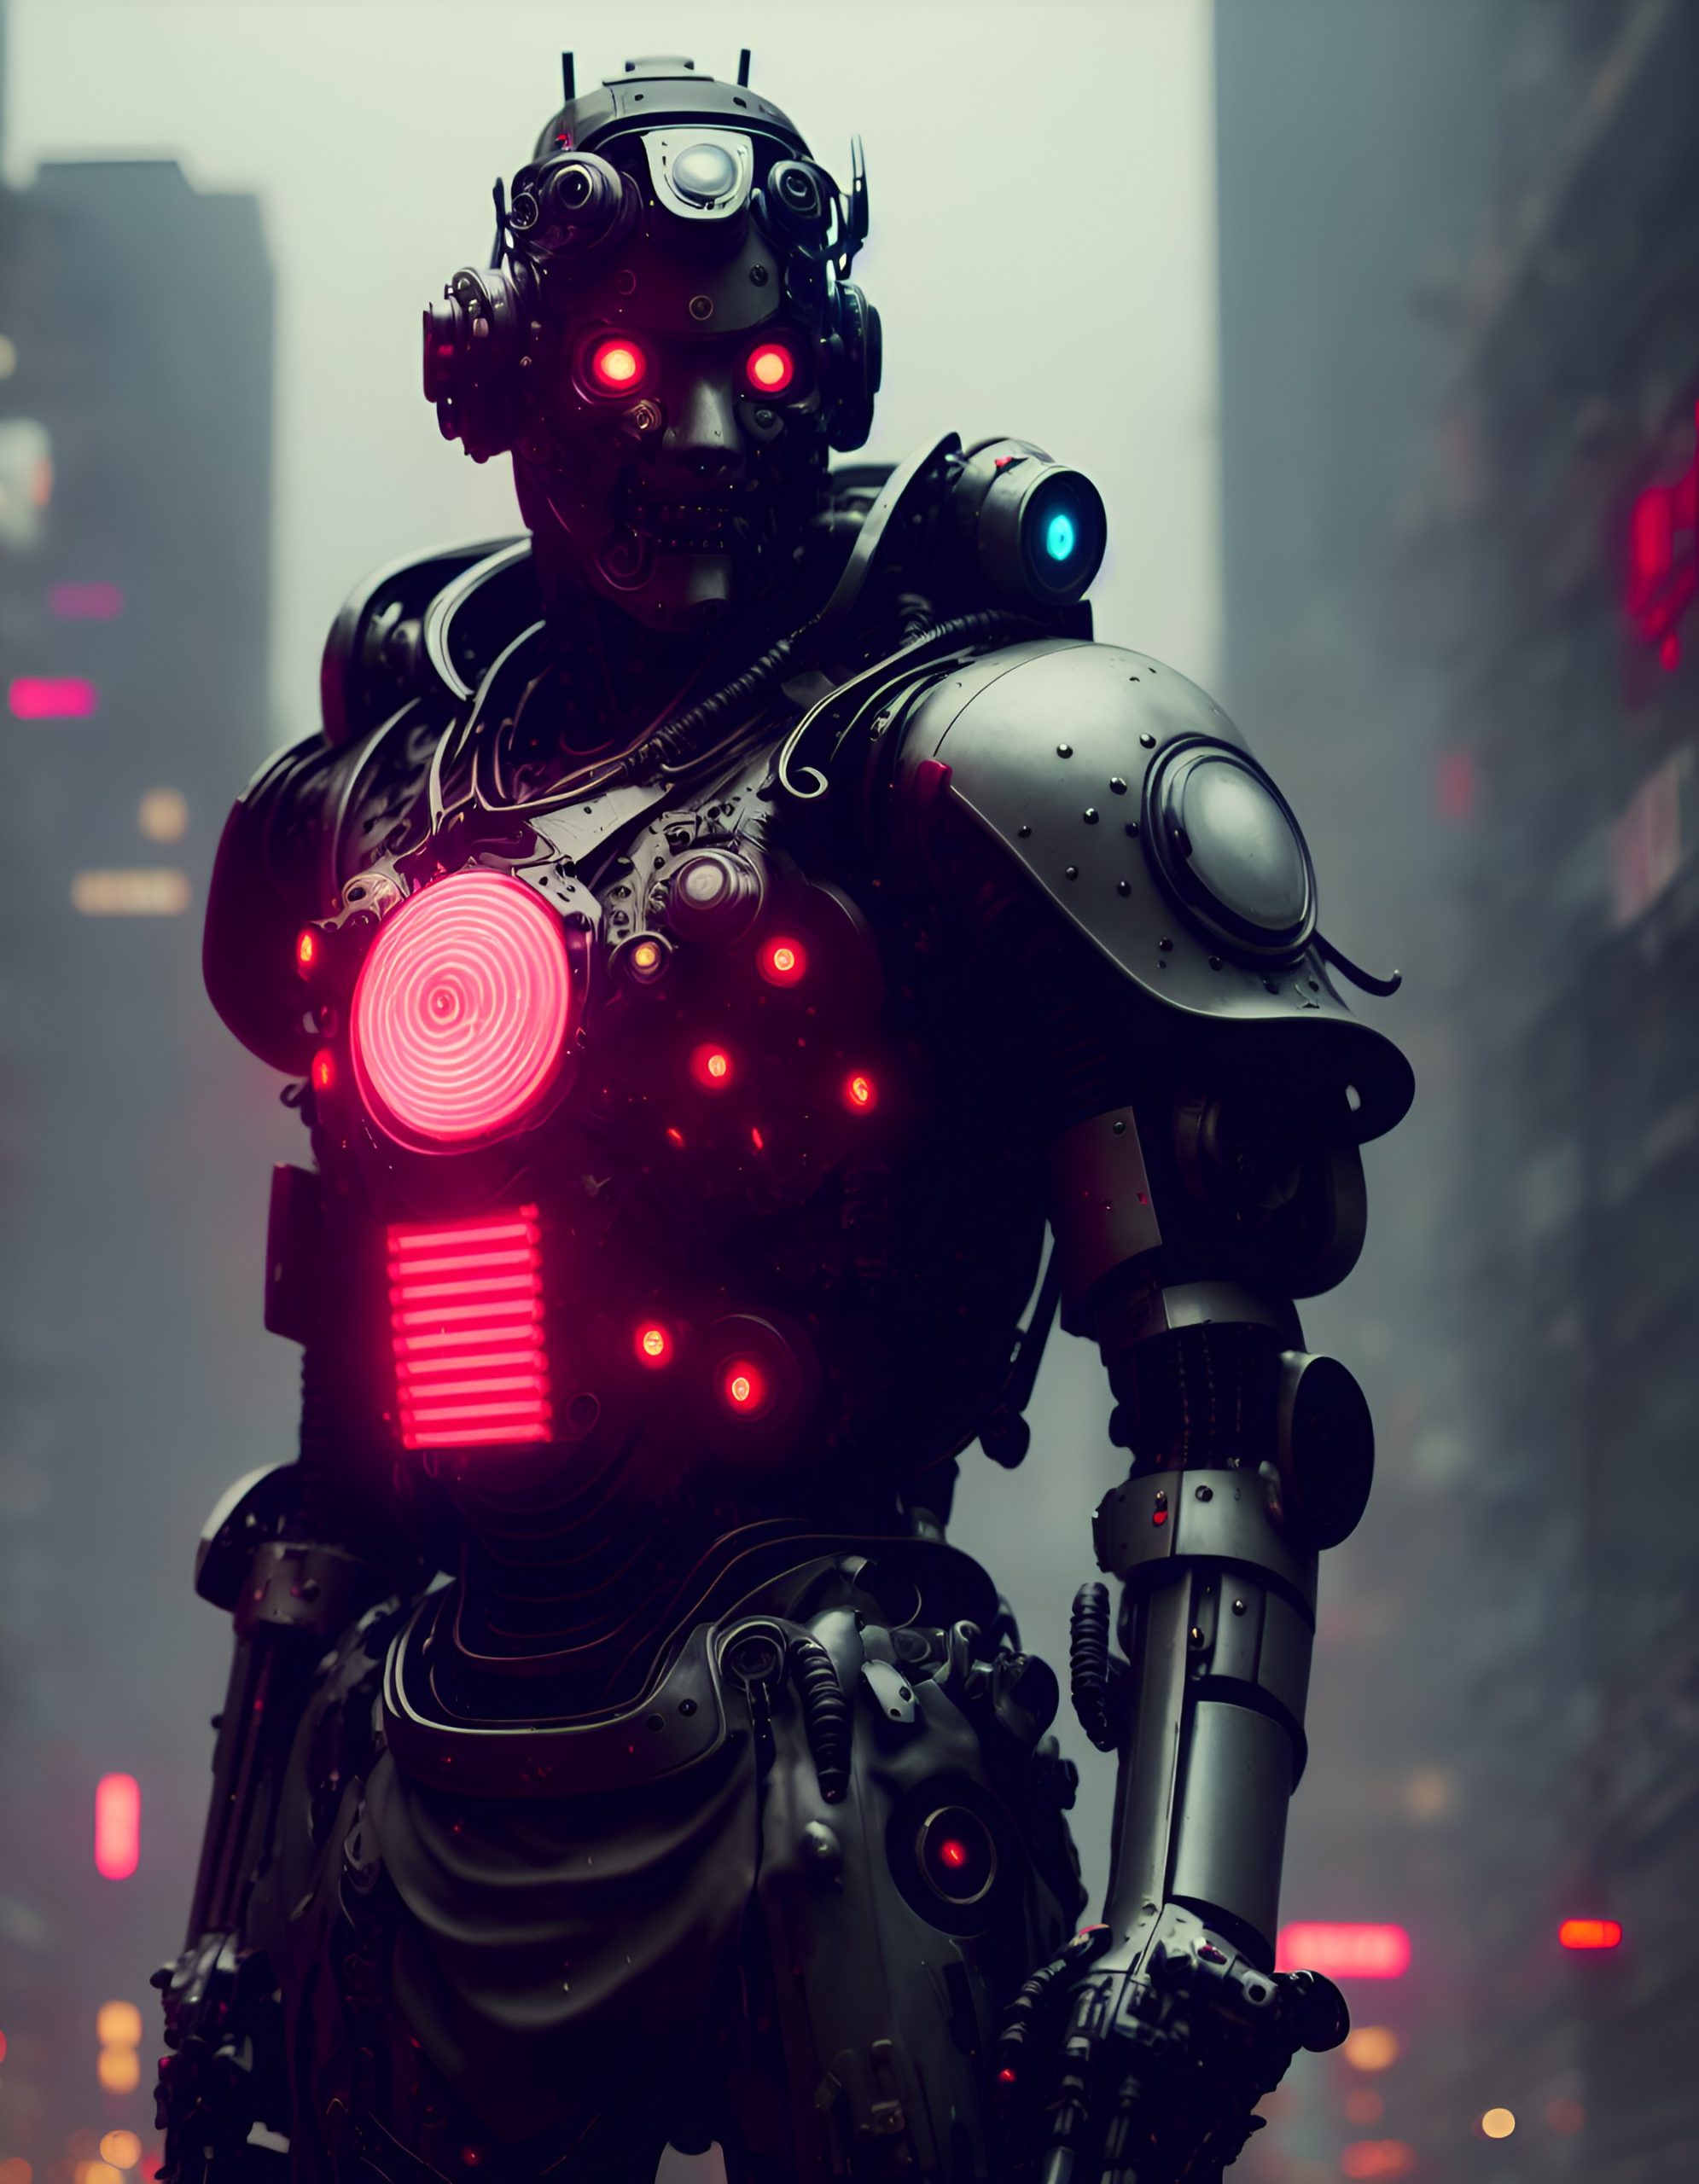 Cyberpunk Samurai: A Stunning Example of Photorealistic Digital Art